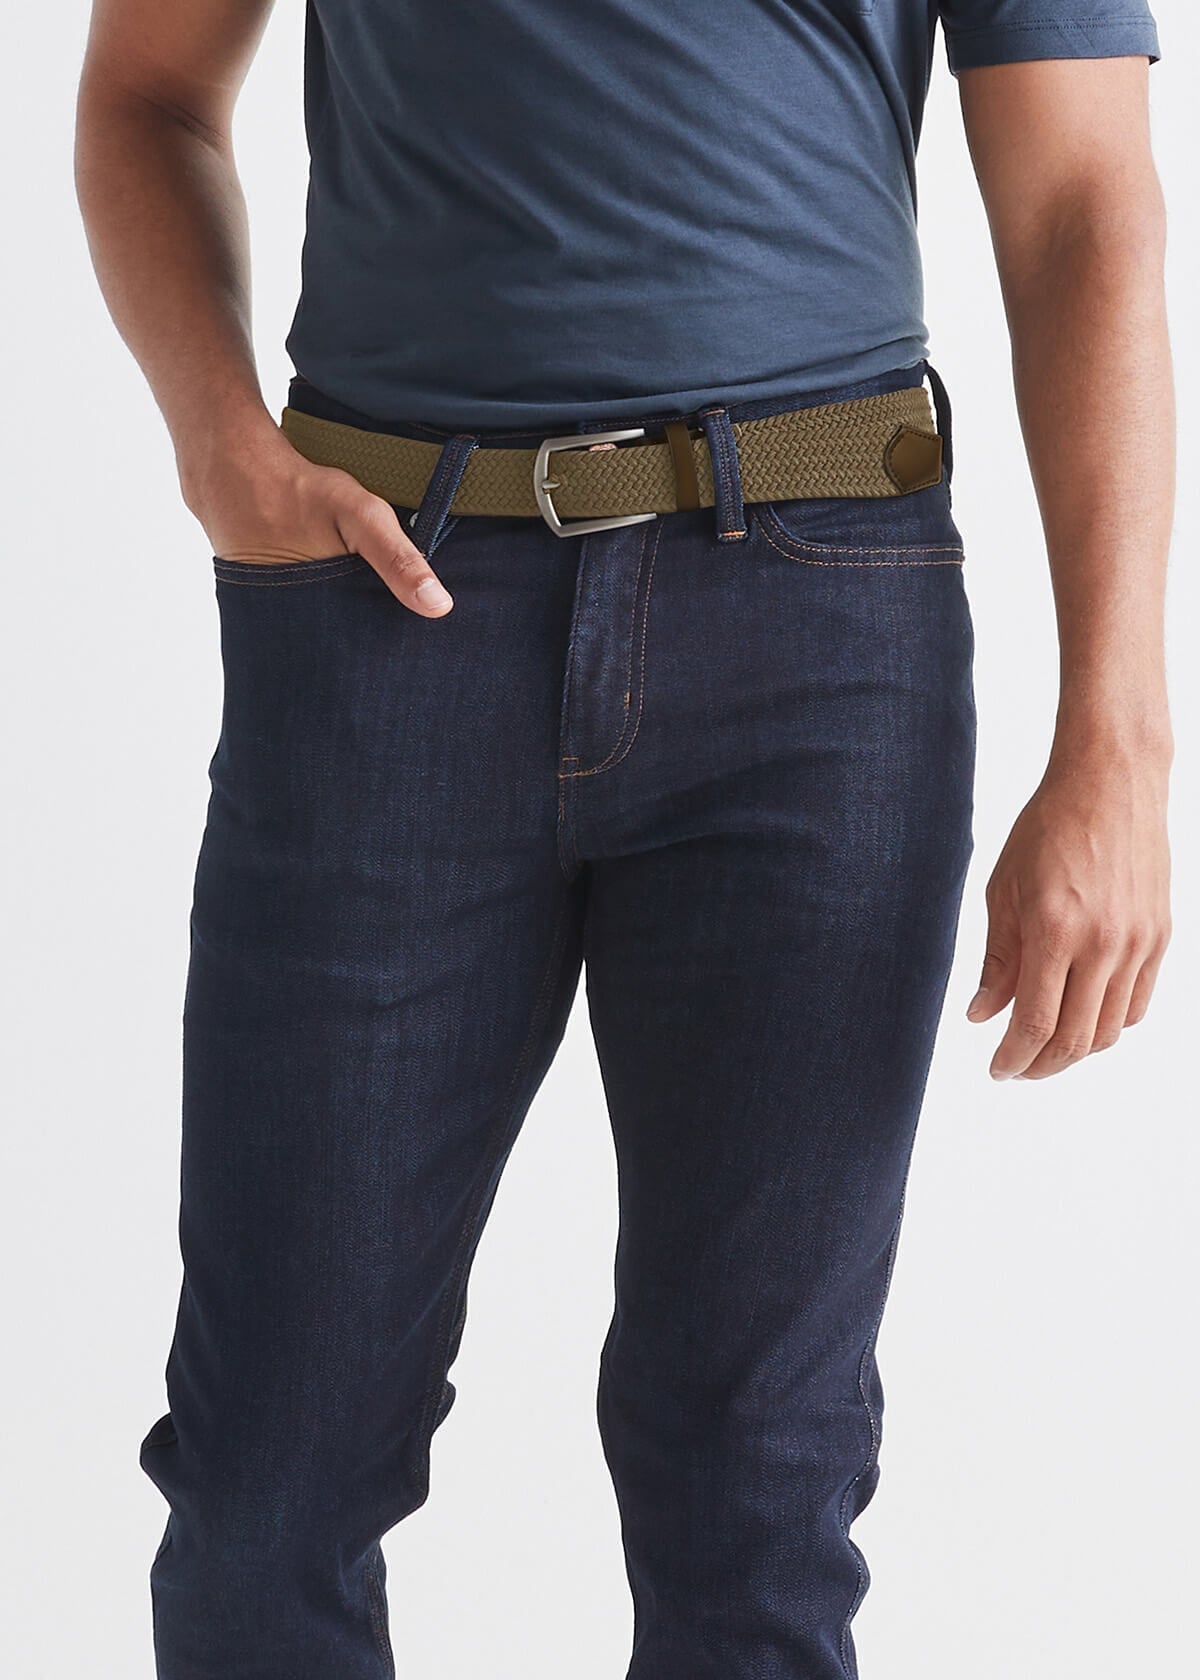 mens dark khaki performance stretch belt front with hand in pocket